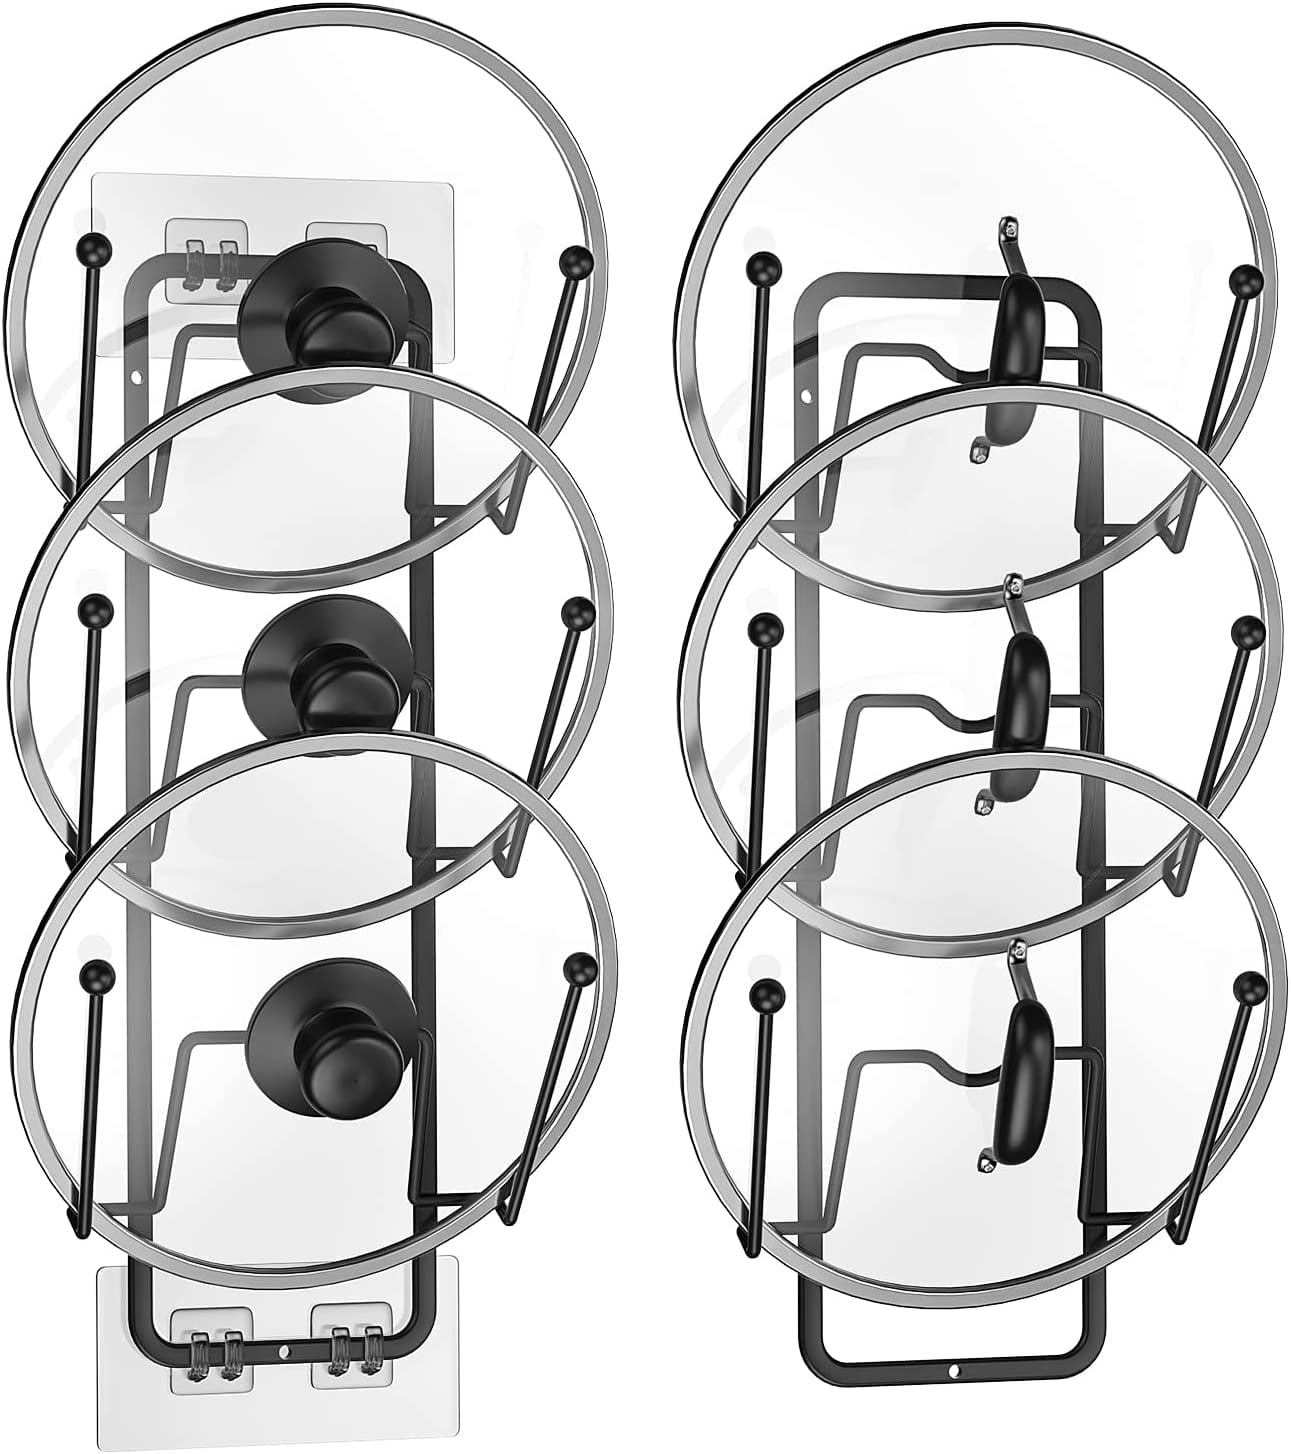 Aoibox 6-Tier Pots and Pans Lid Organizer Rack Holder, Adjustable Pot Organizer Rack Dish Rack for Under Cabinet, Black